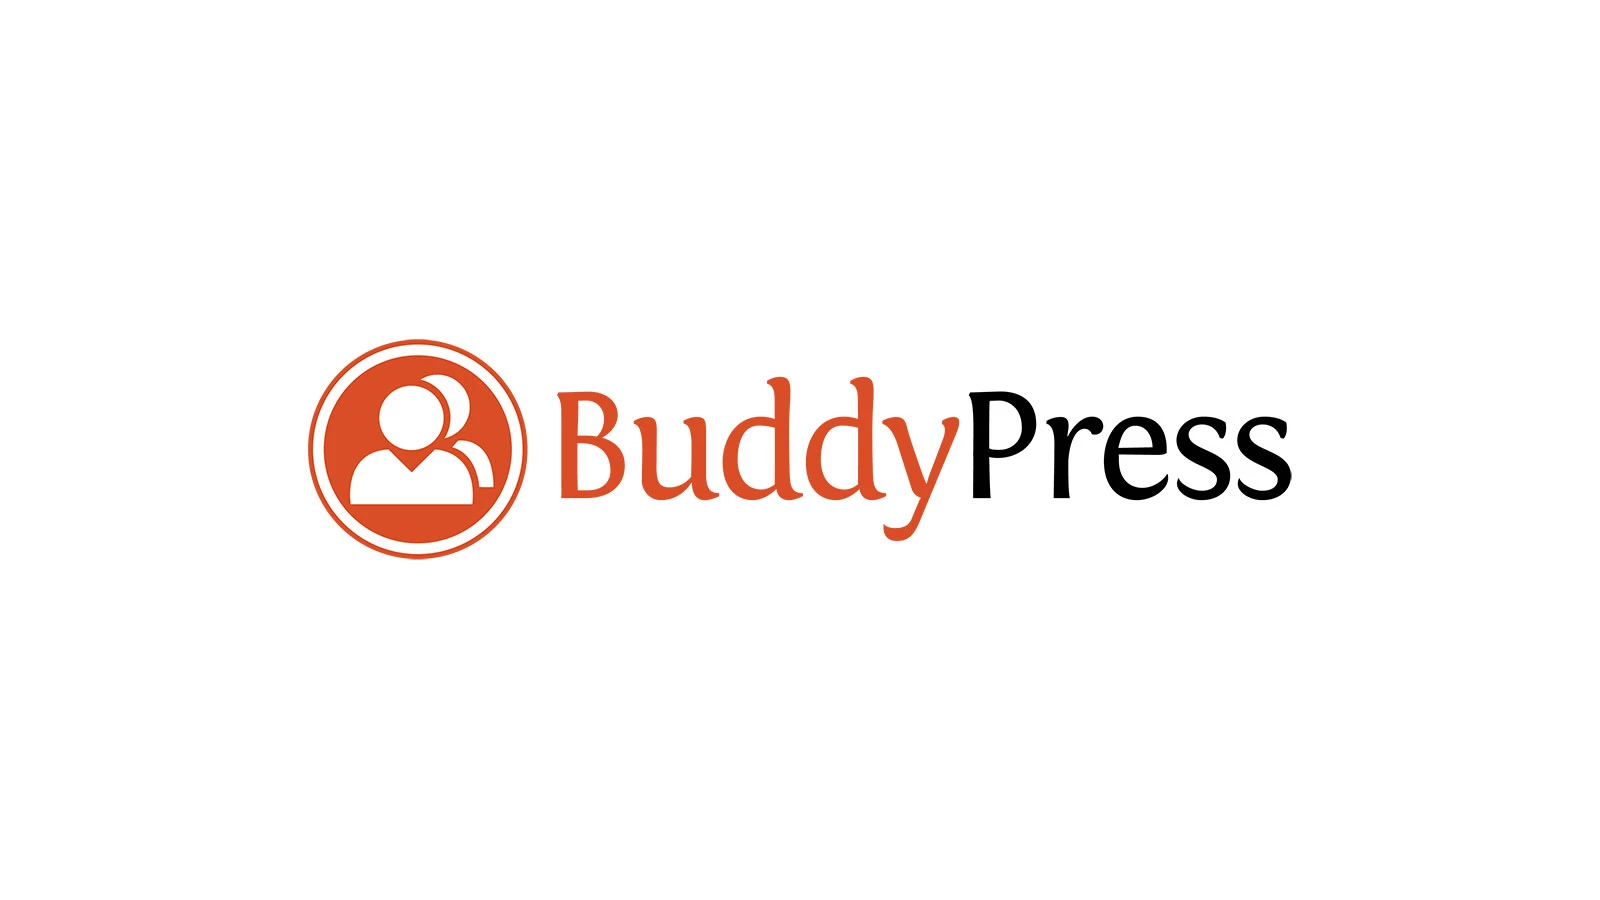 install buddypress in wordpress